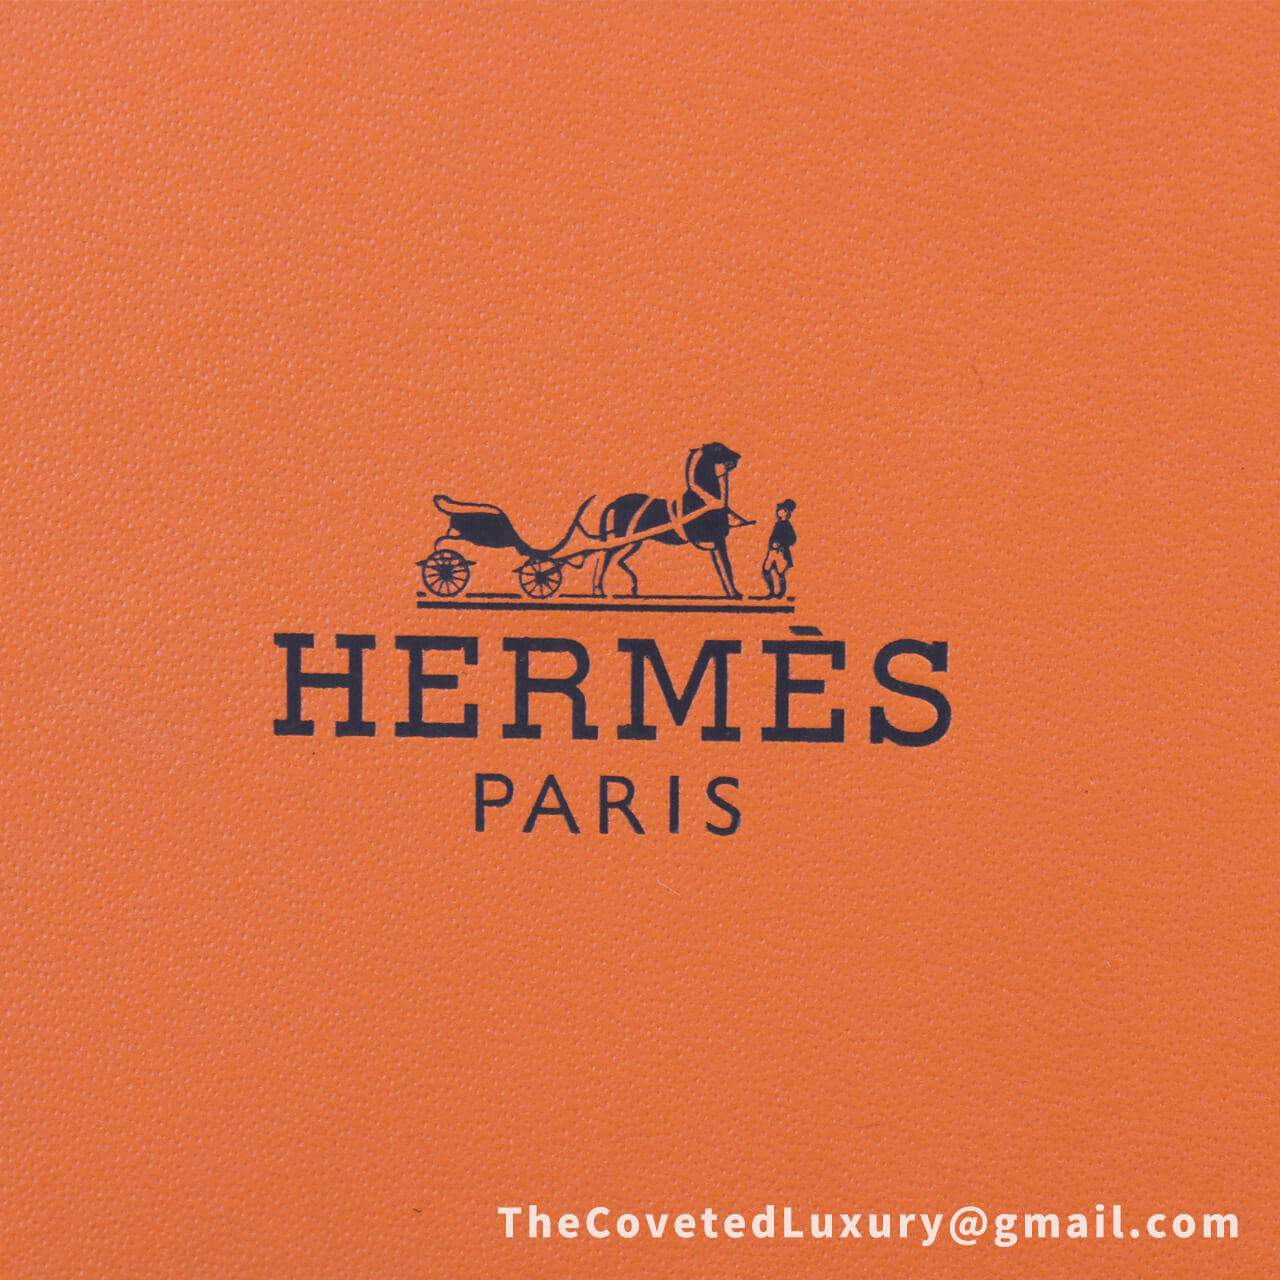 Original Quality Hermes package